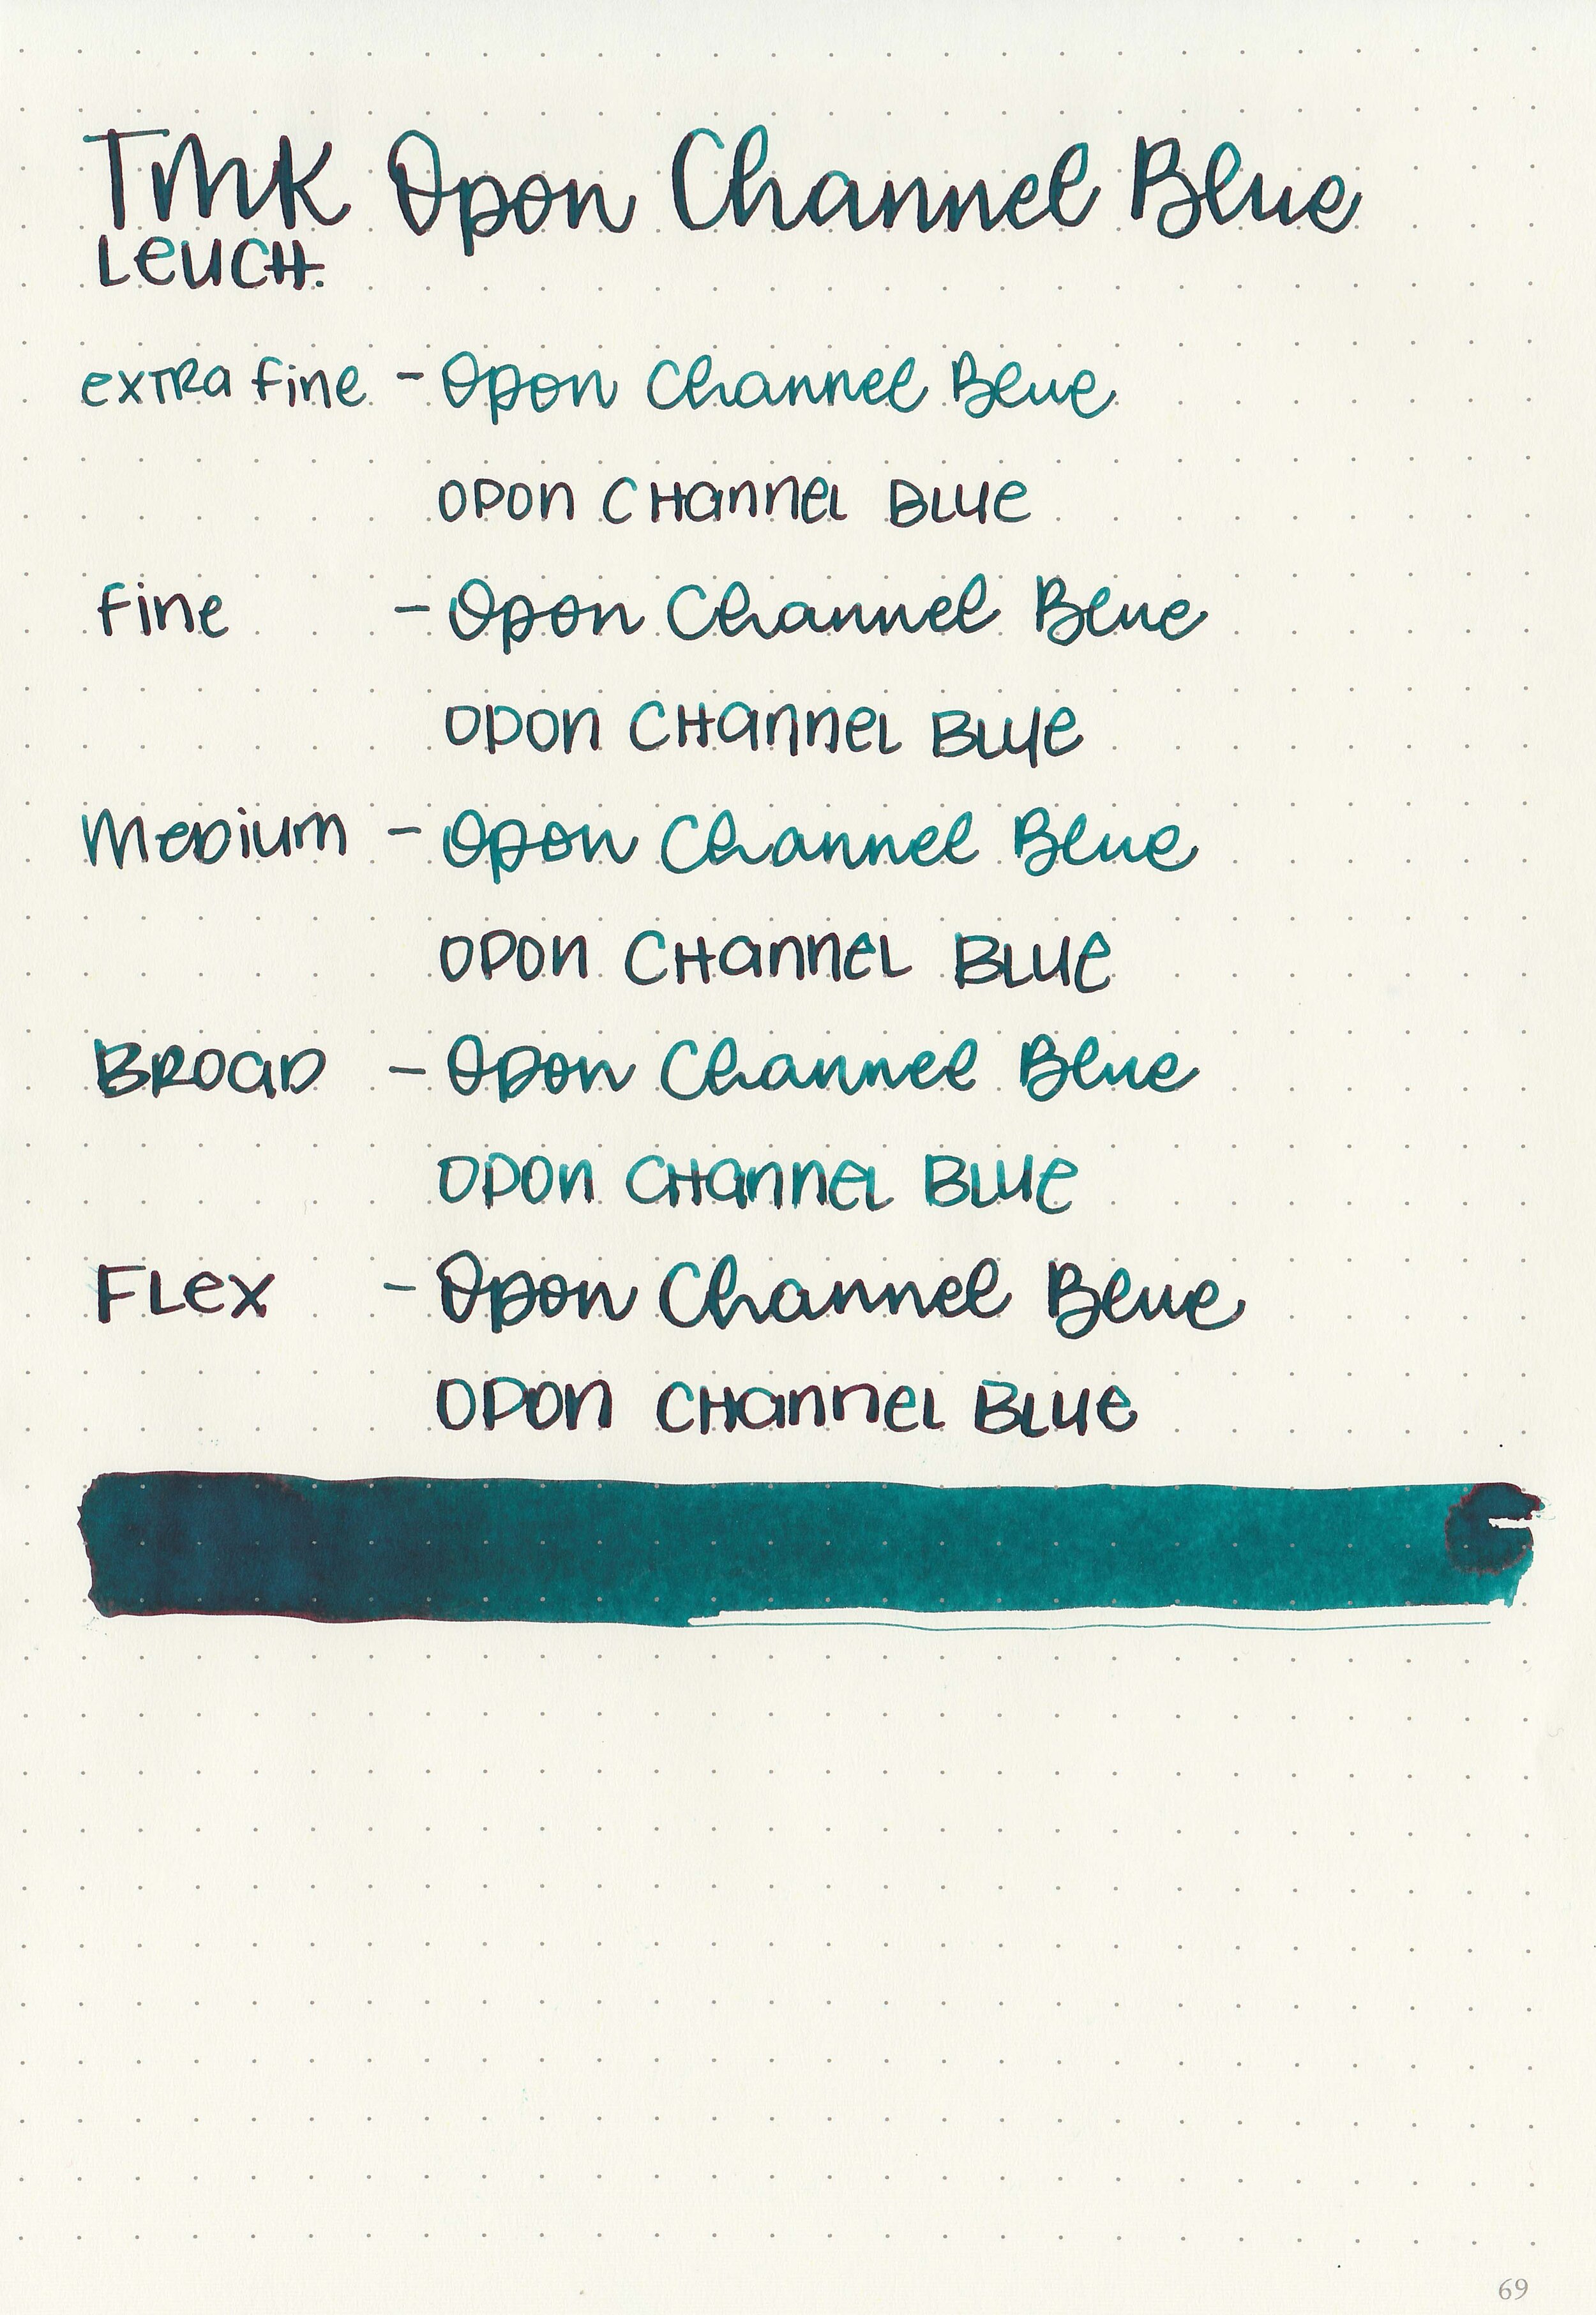 tbm-opon-channel-blue-9.jpg